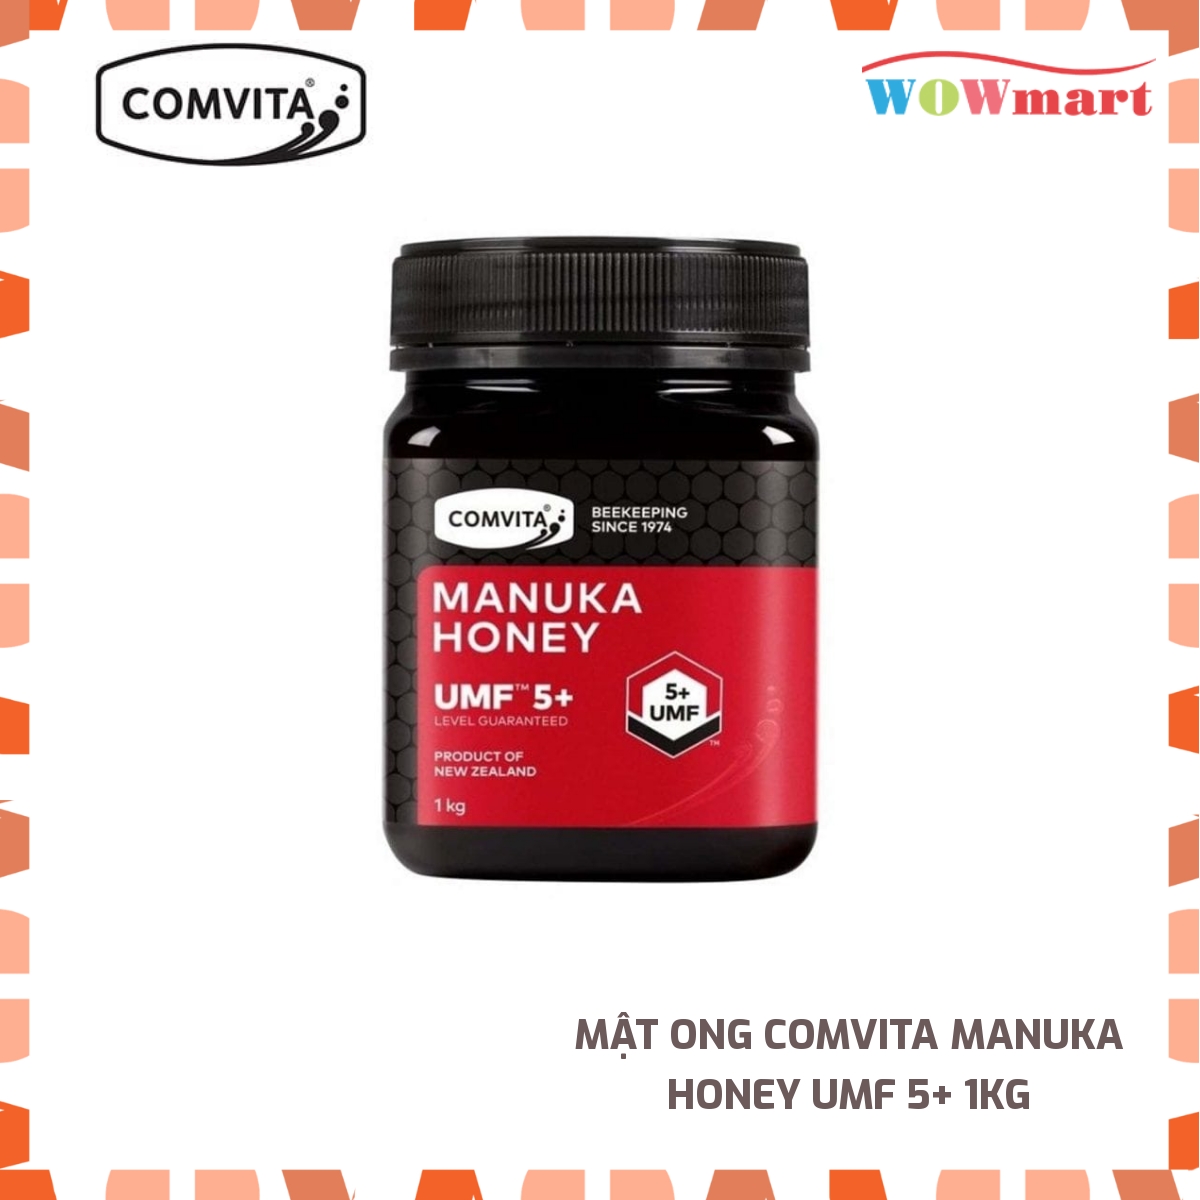 Mật ong Comvita Manuka Honey UMF 5+ 1kg - New Zealand